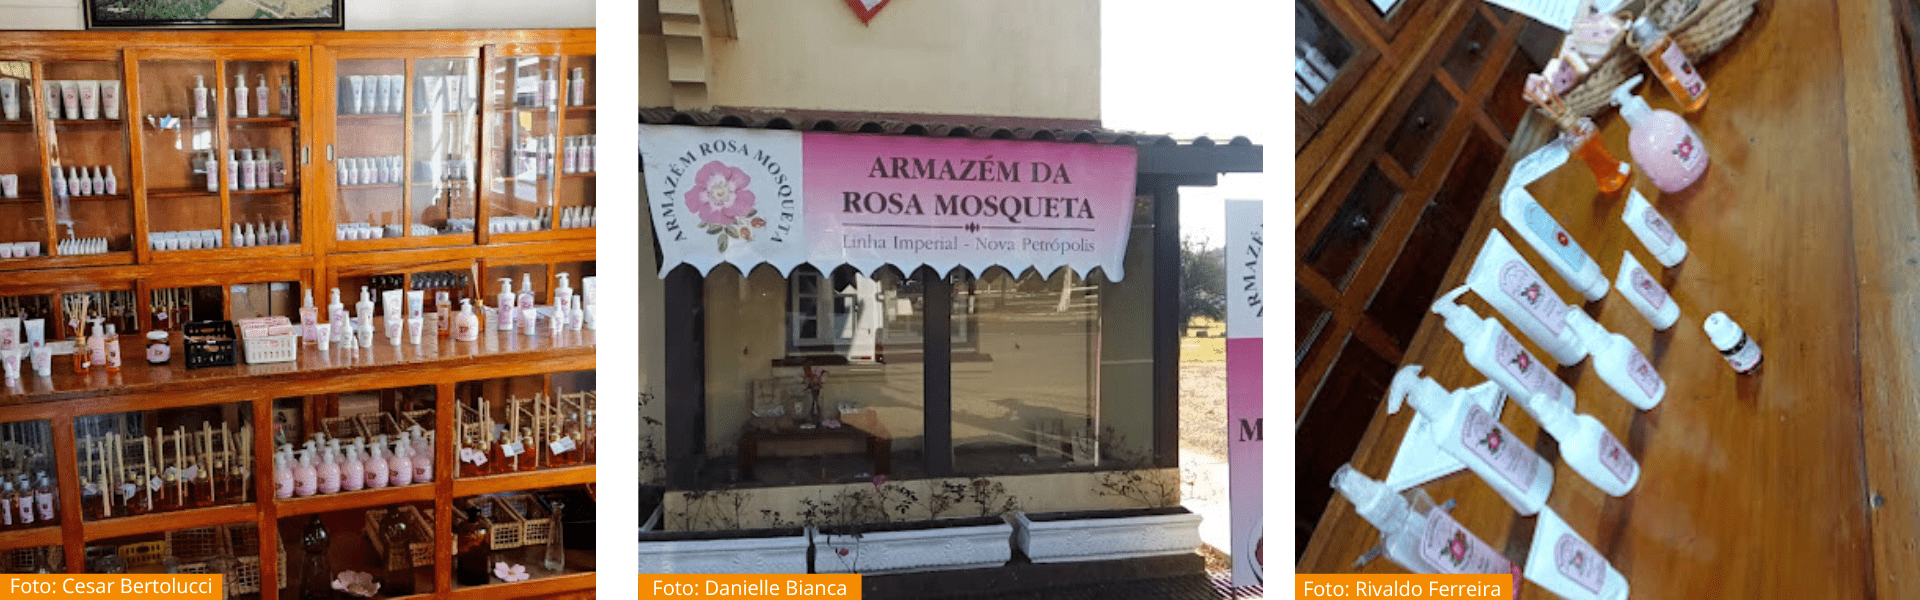 Armazém Rosa Mosqueta